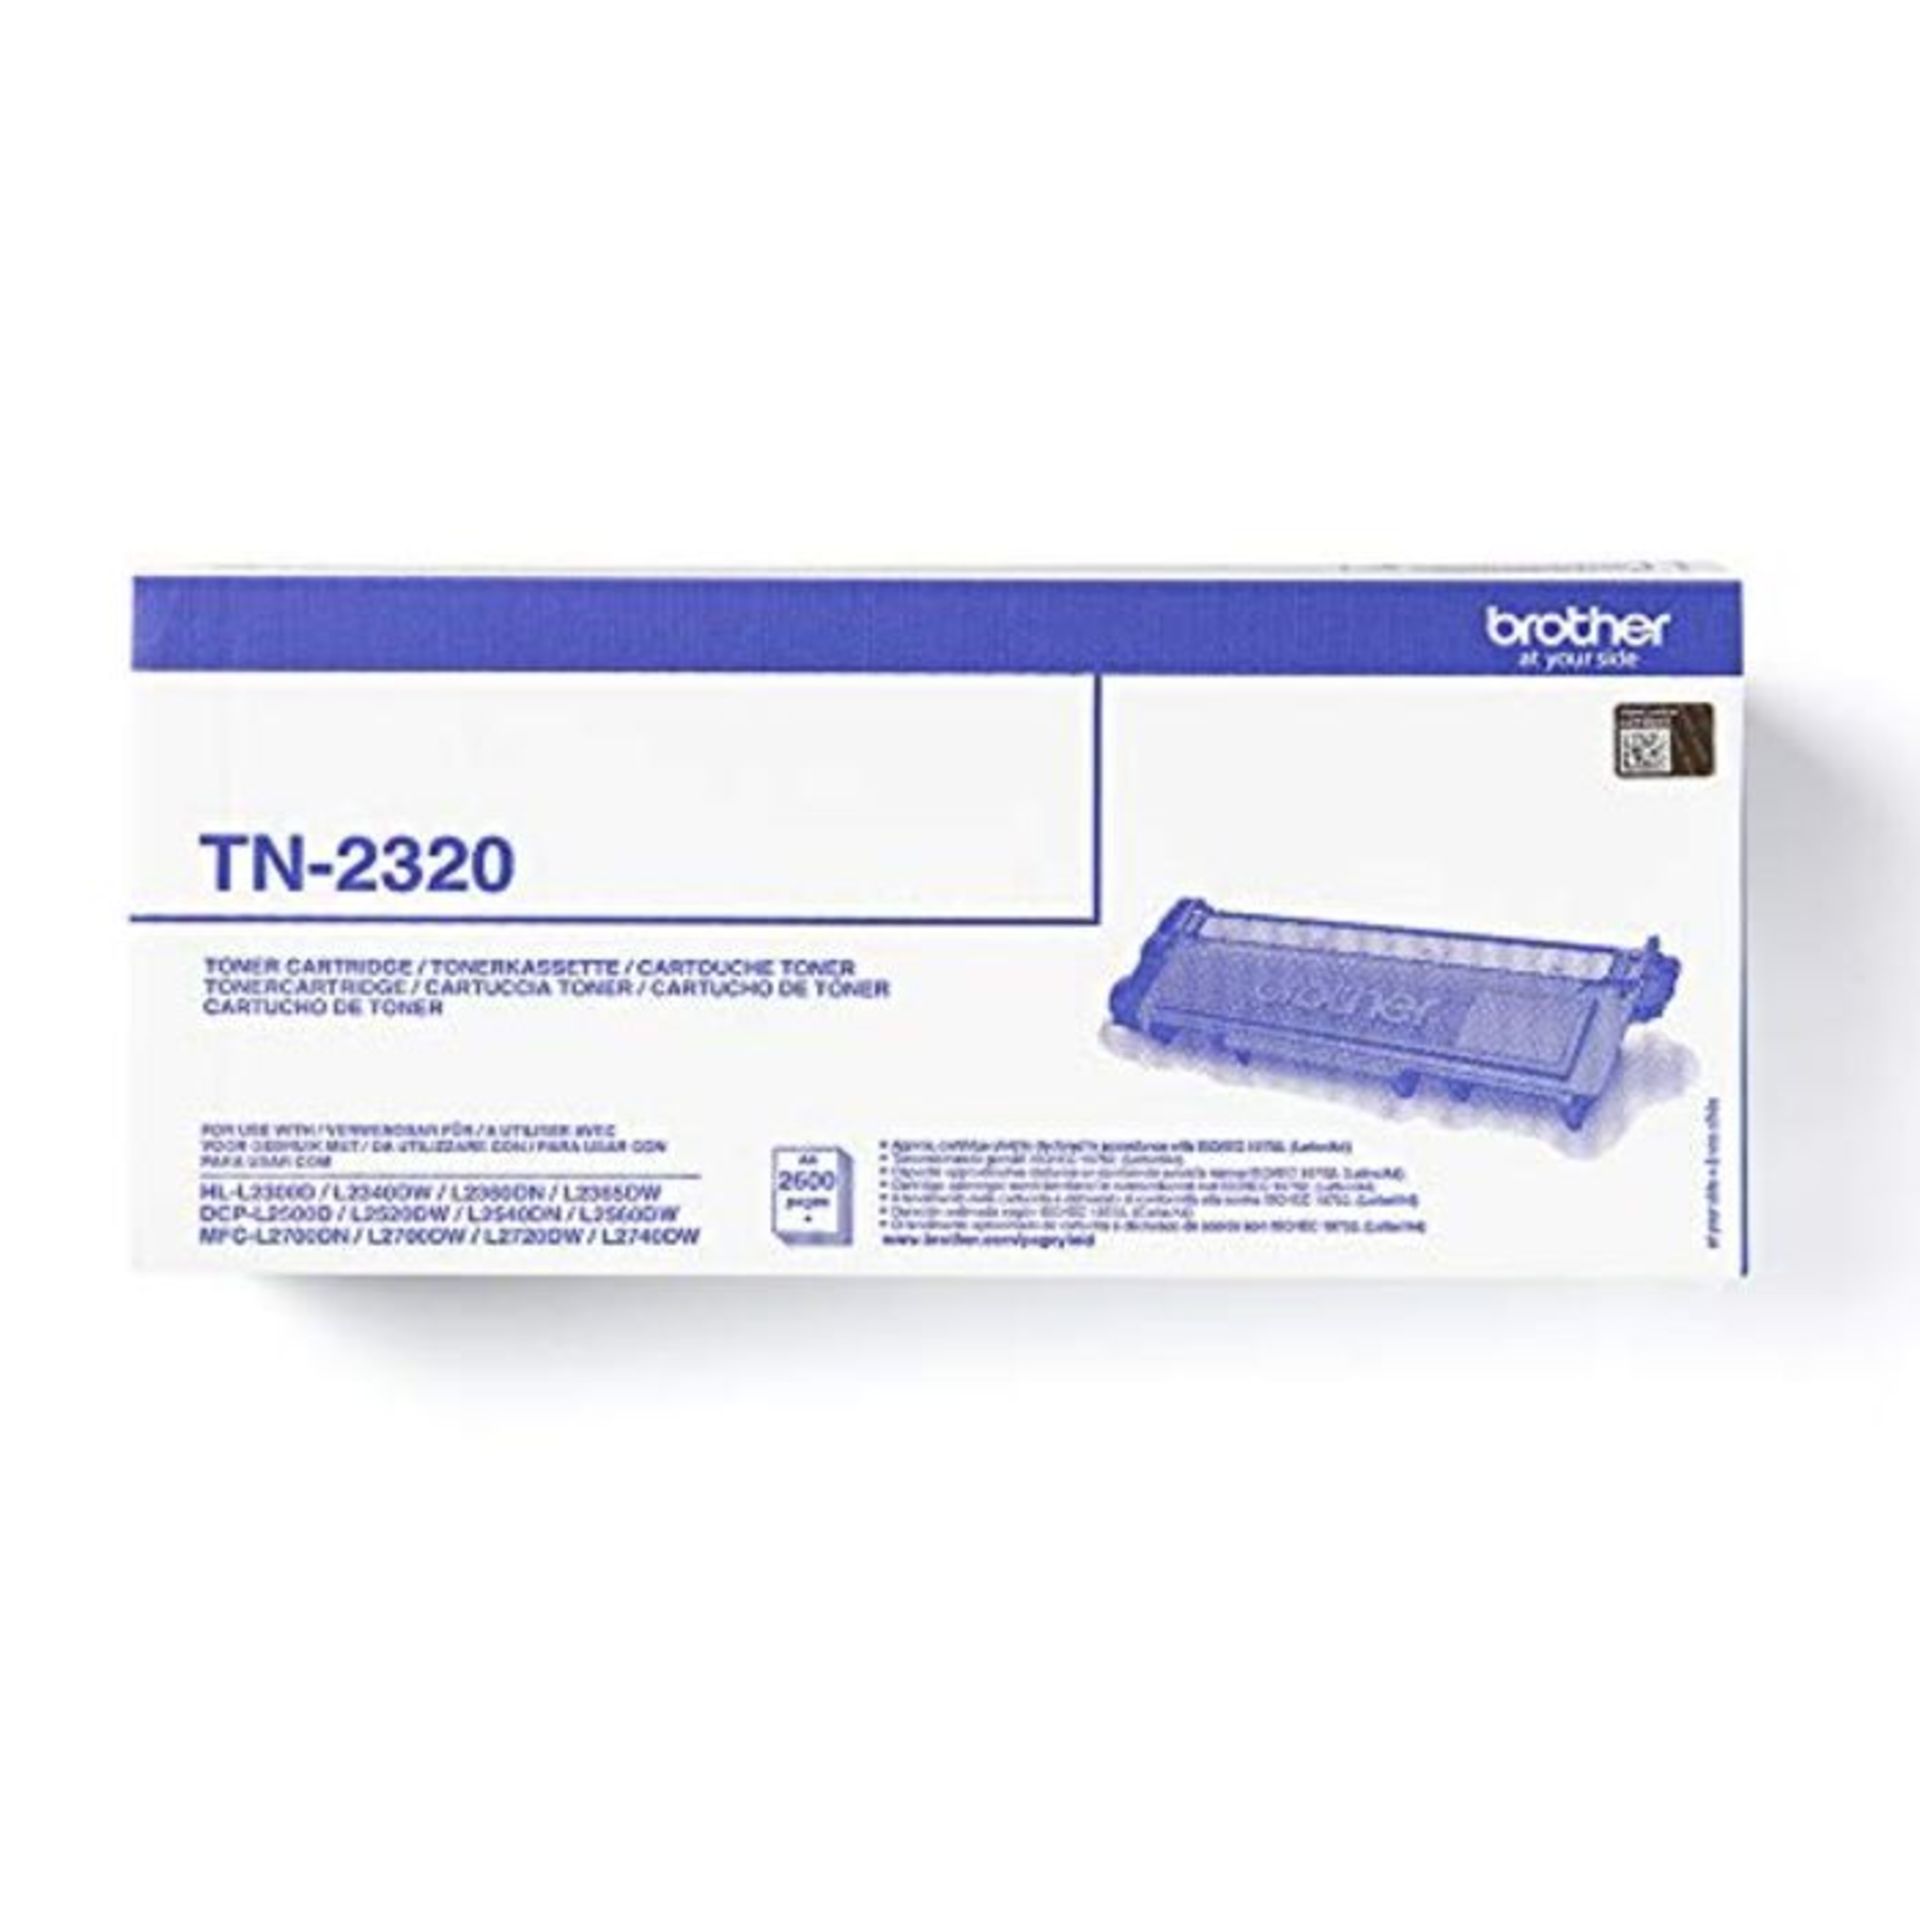 RRP £53.00 Brother TN-2320 Toner Cartridge, Black, Single Pack, High Yield, Includes 1 x Toner Ca